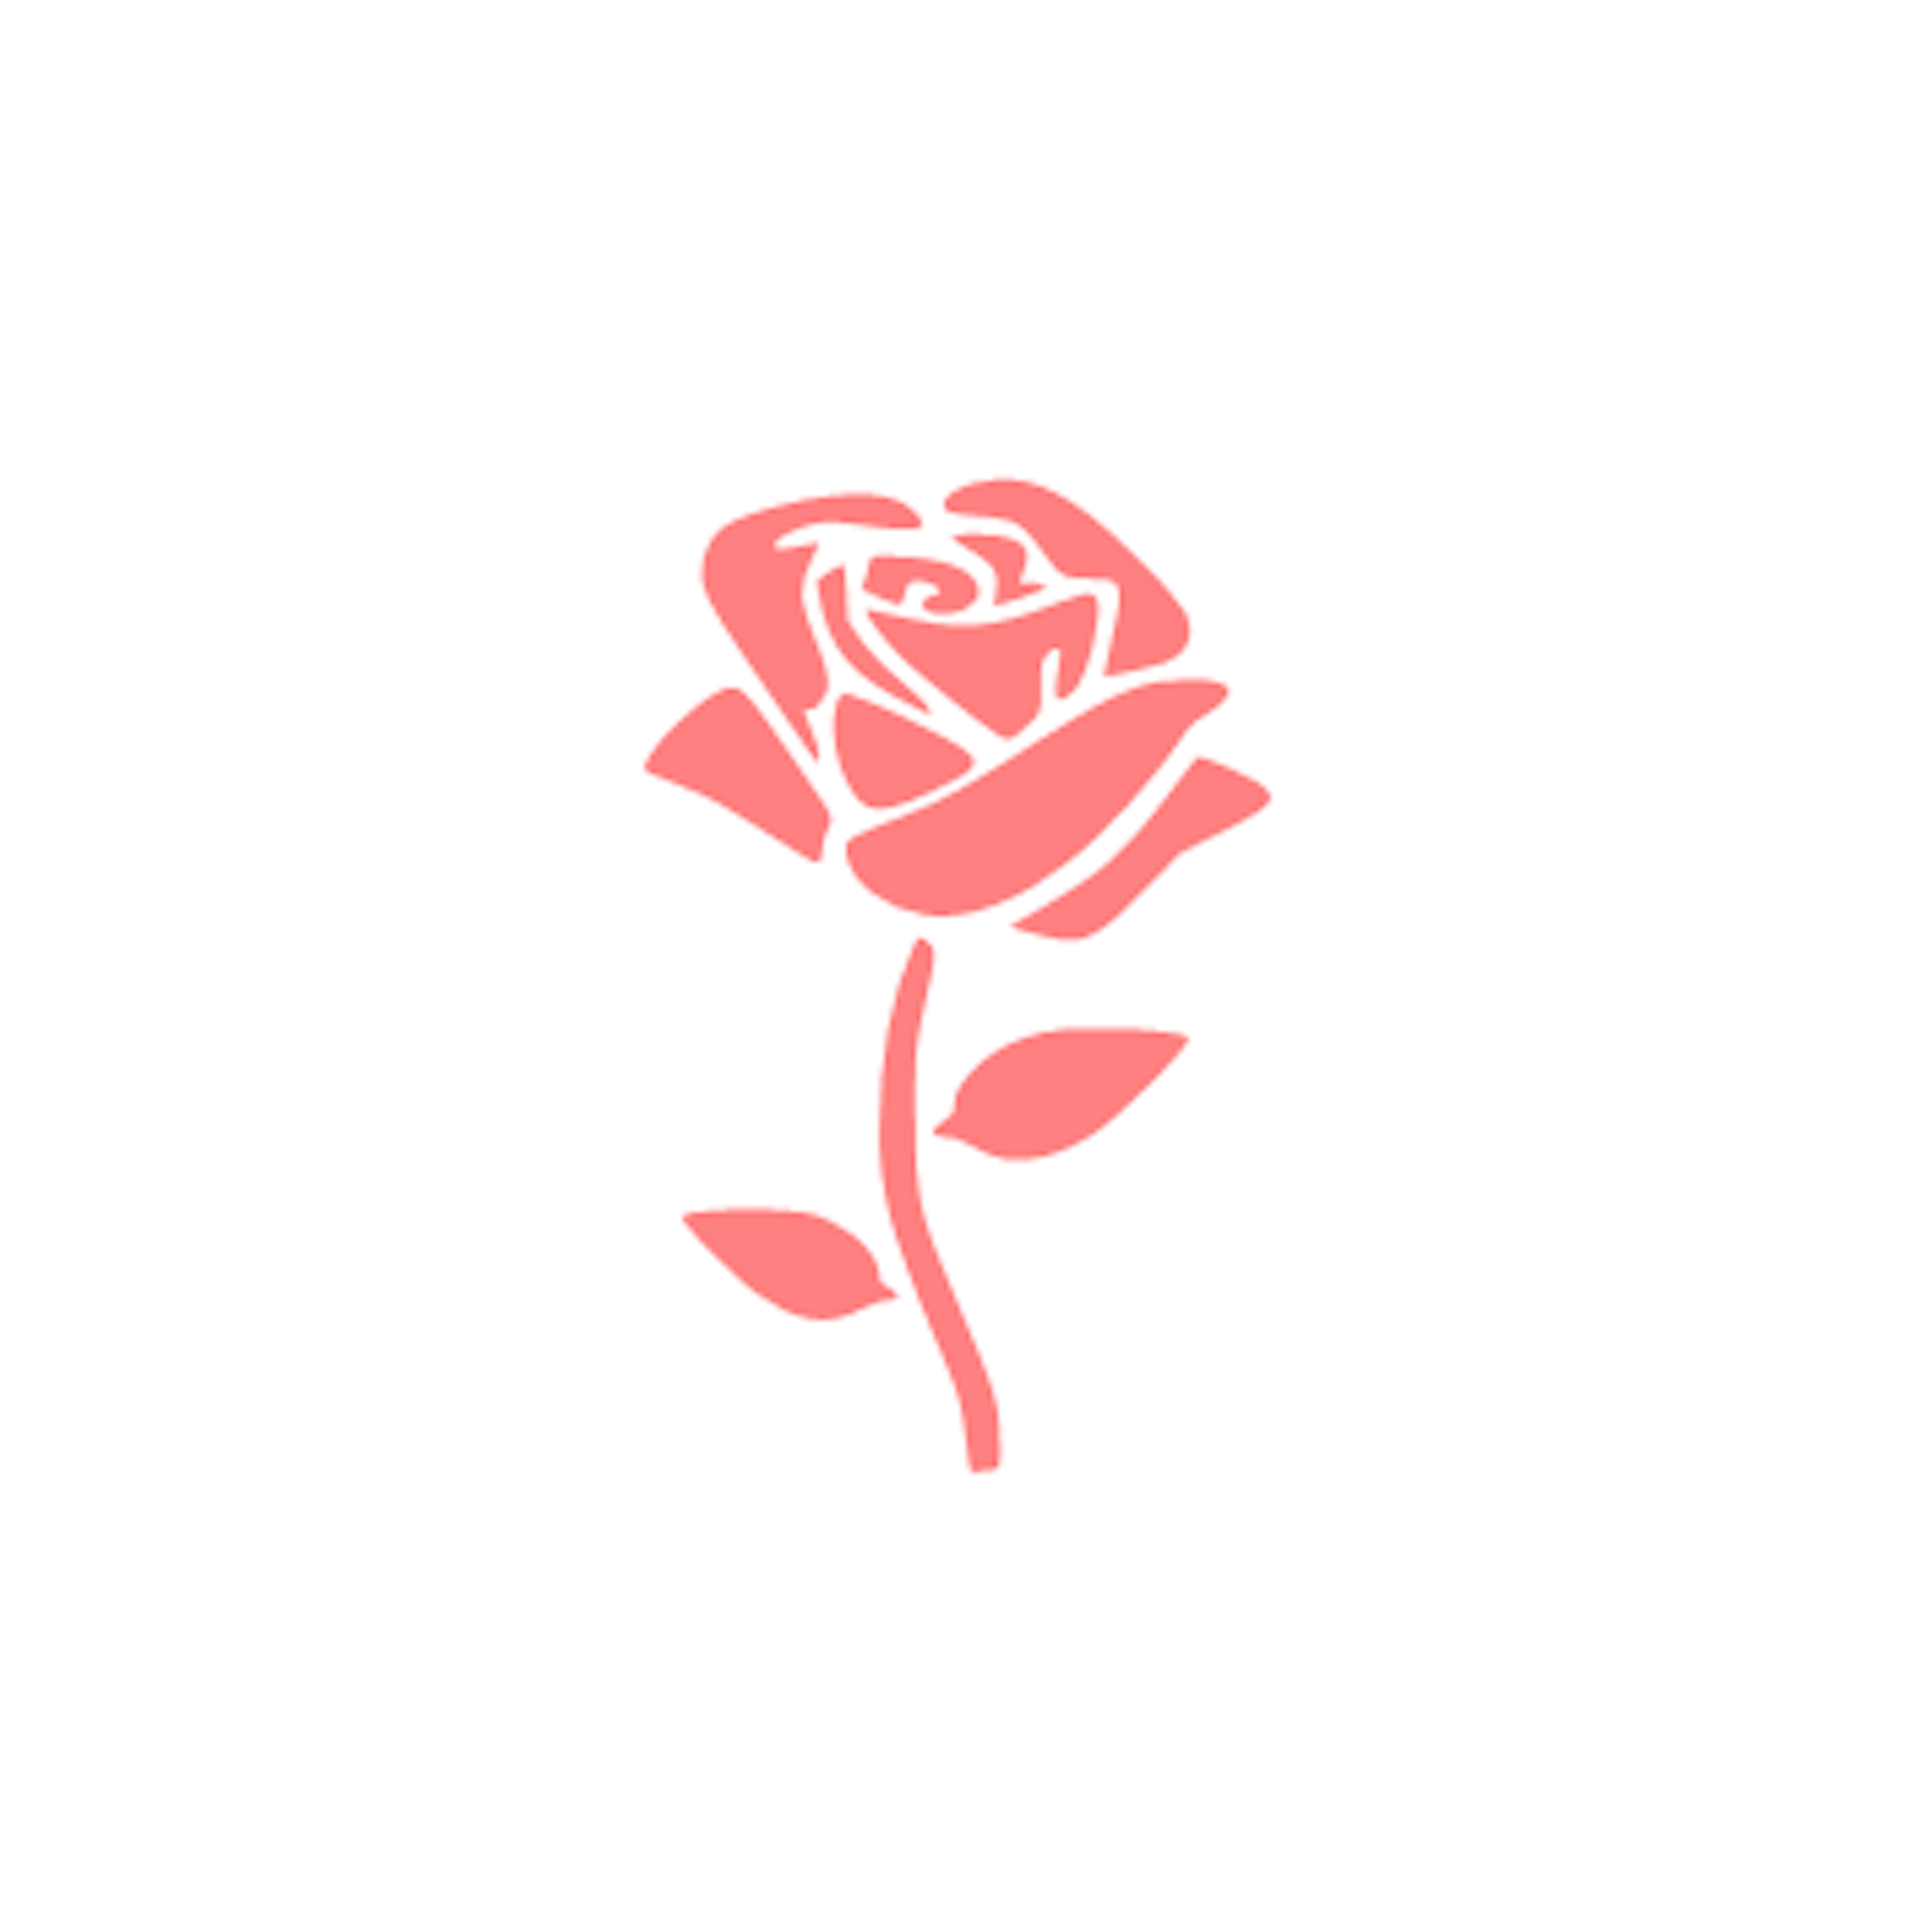 Lancome Flower Logo - Rose on Stem Stencil | Design | Flower logo, Logos, Stencils